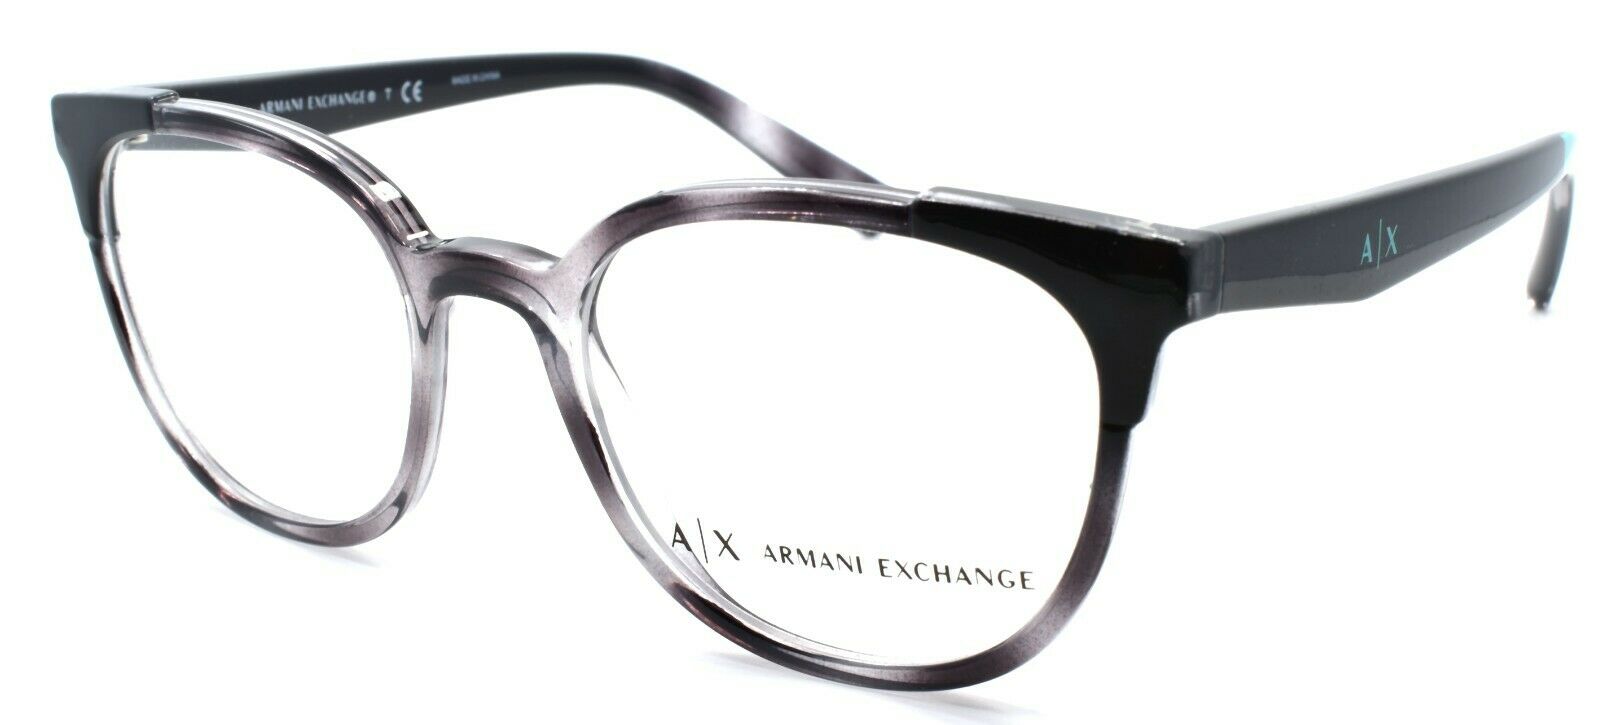 1-Armani Exchange AX3051 8251 Women's Eyeglasses Frames 51-19-140 Grey Havana-8053672884869-IKSpecs